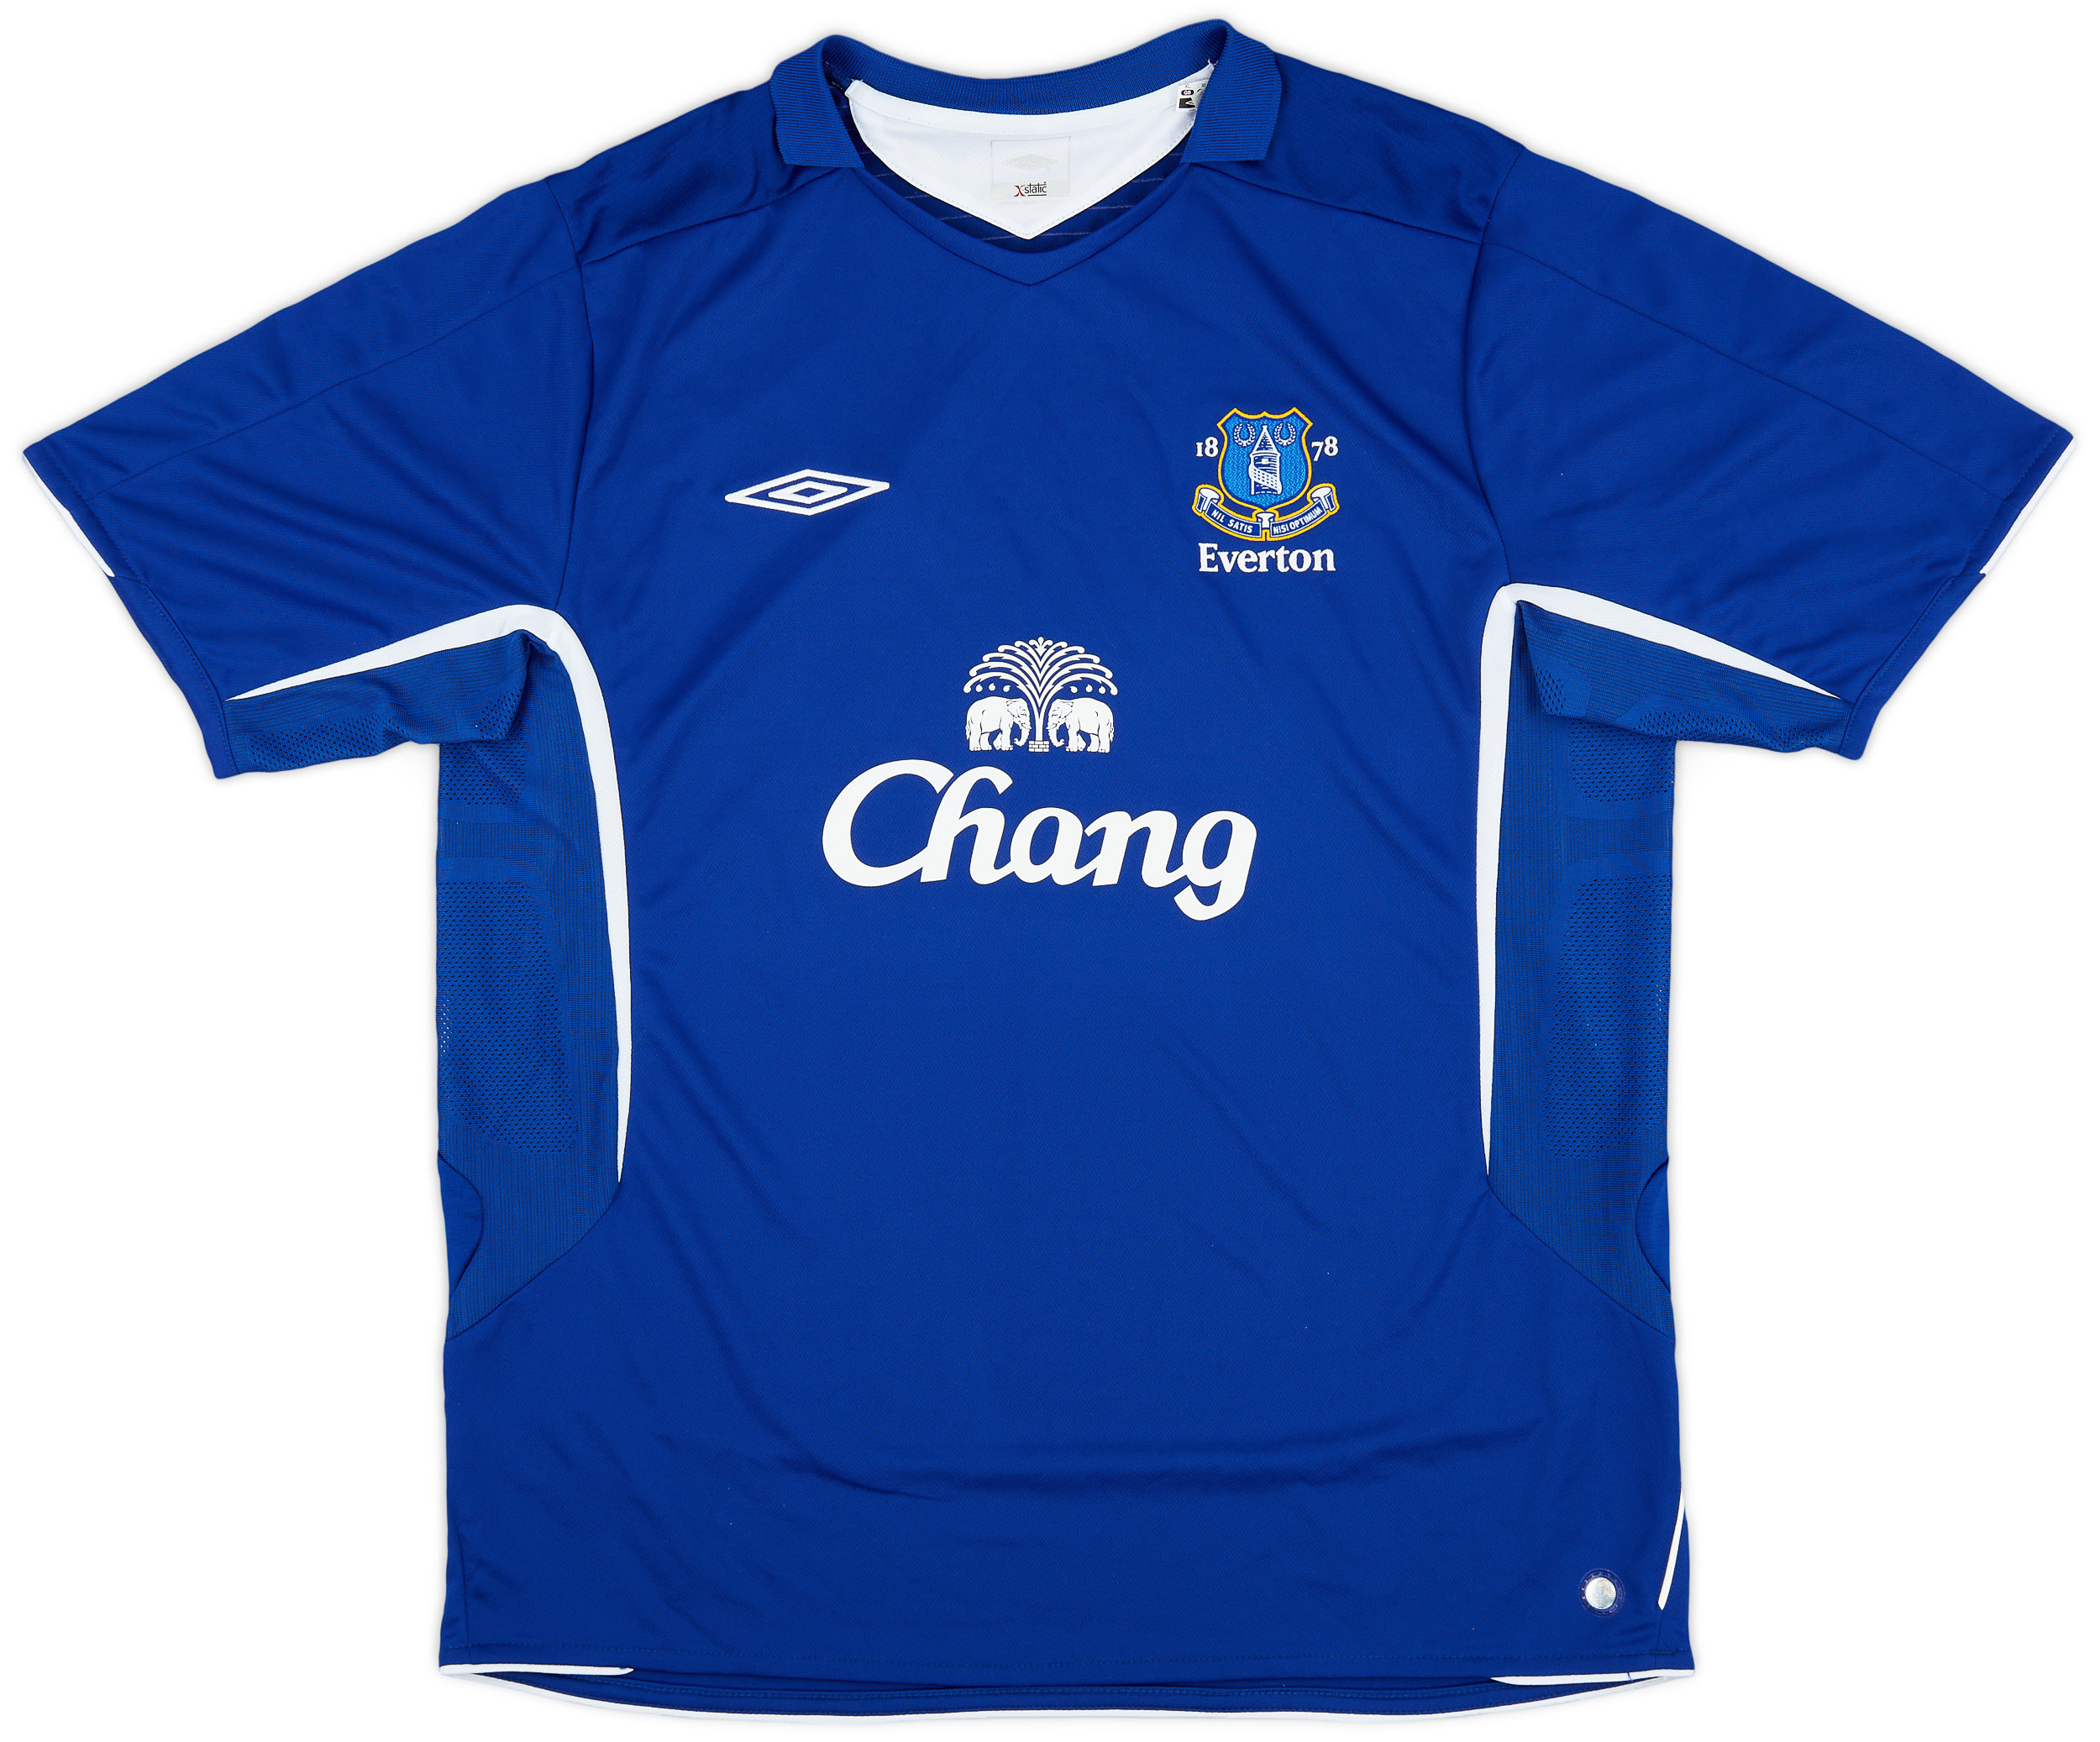 2005-06 Everton Home Shirt - 9/10 - ()